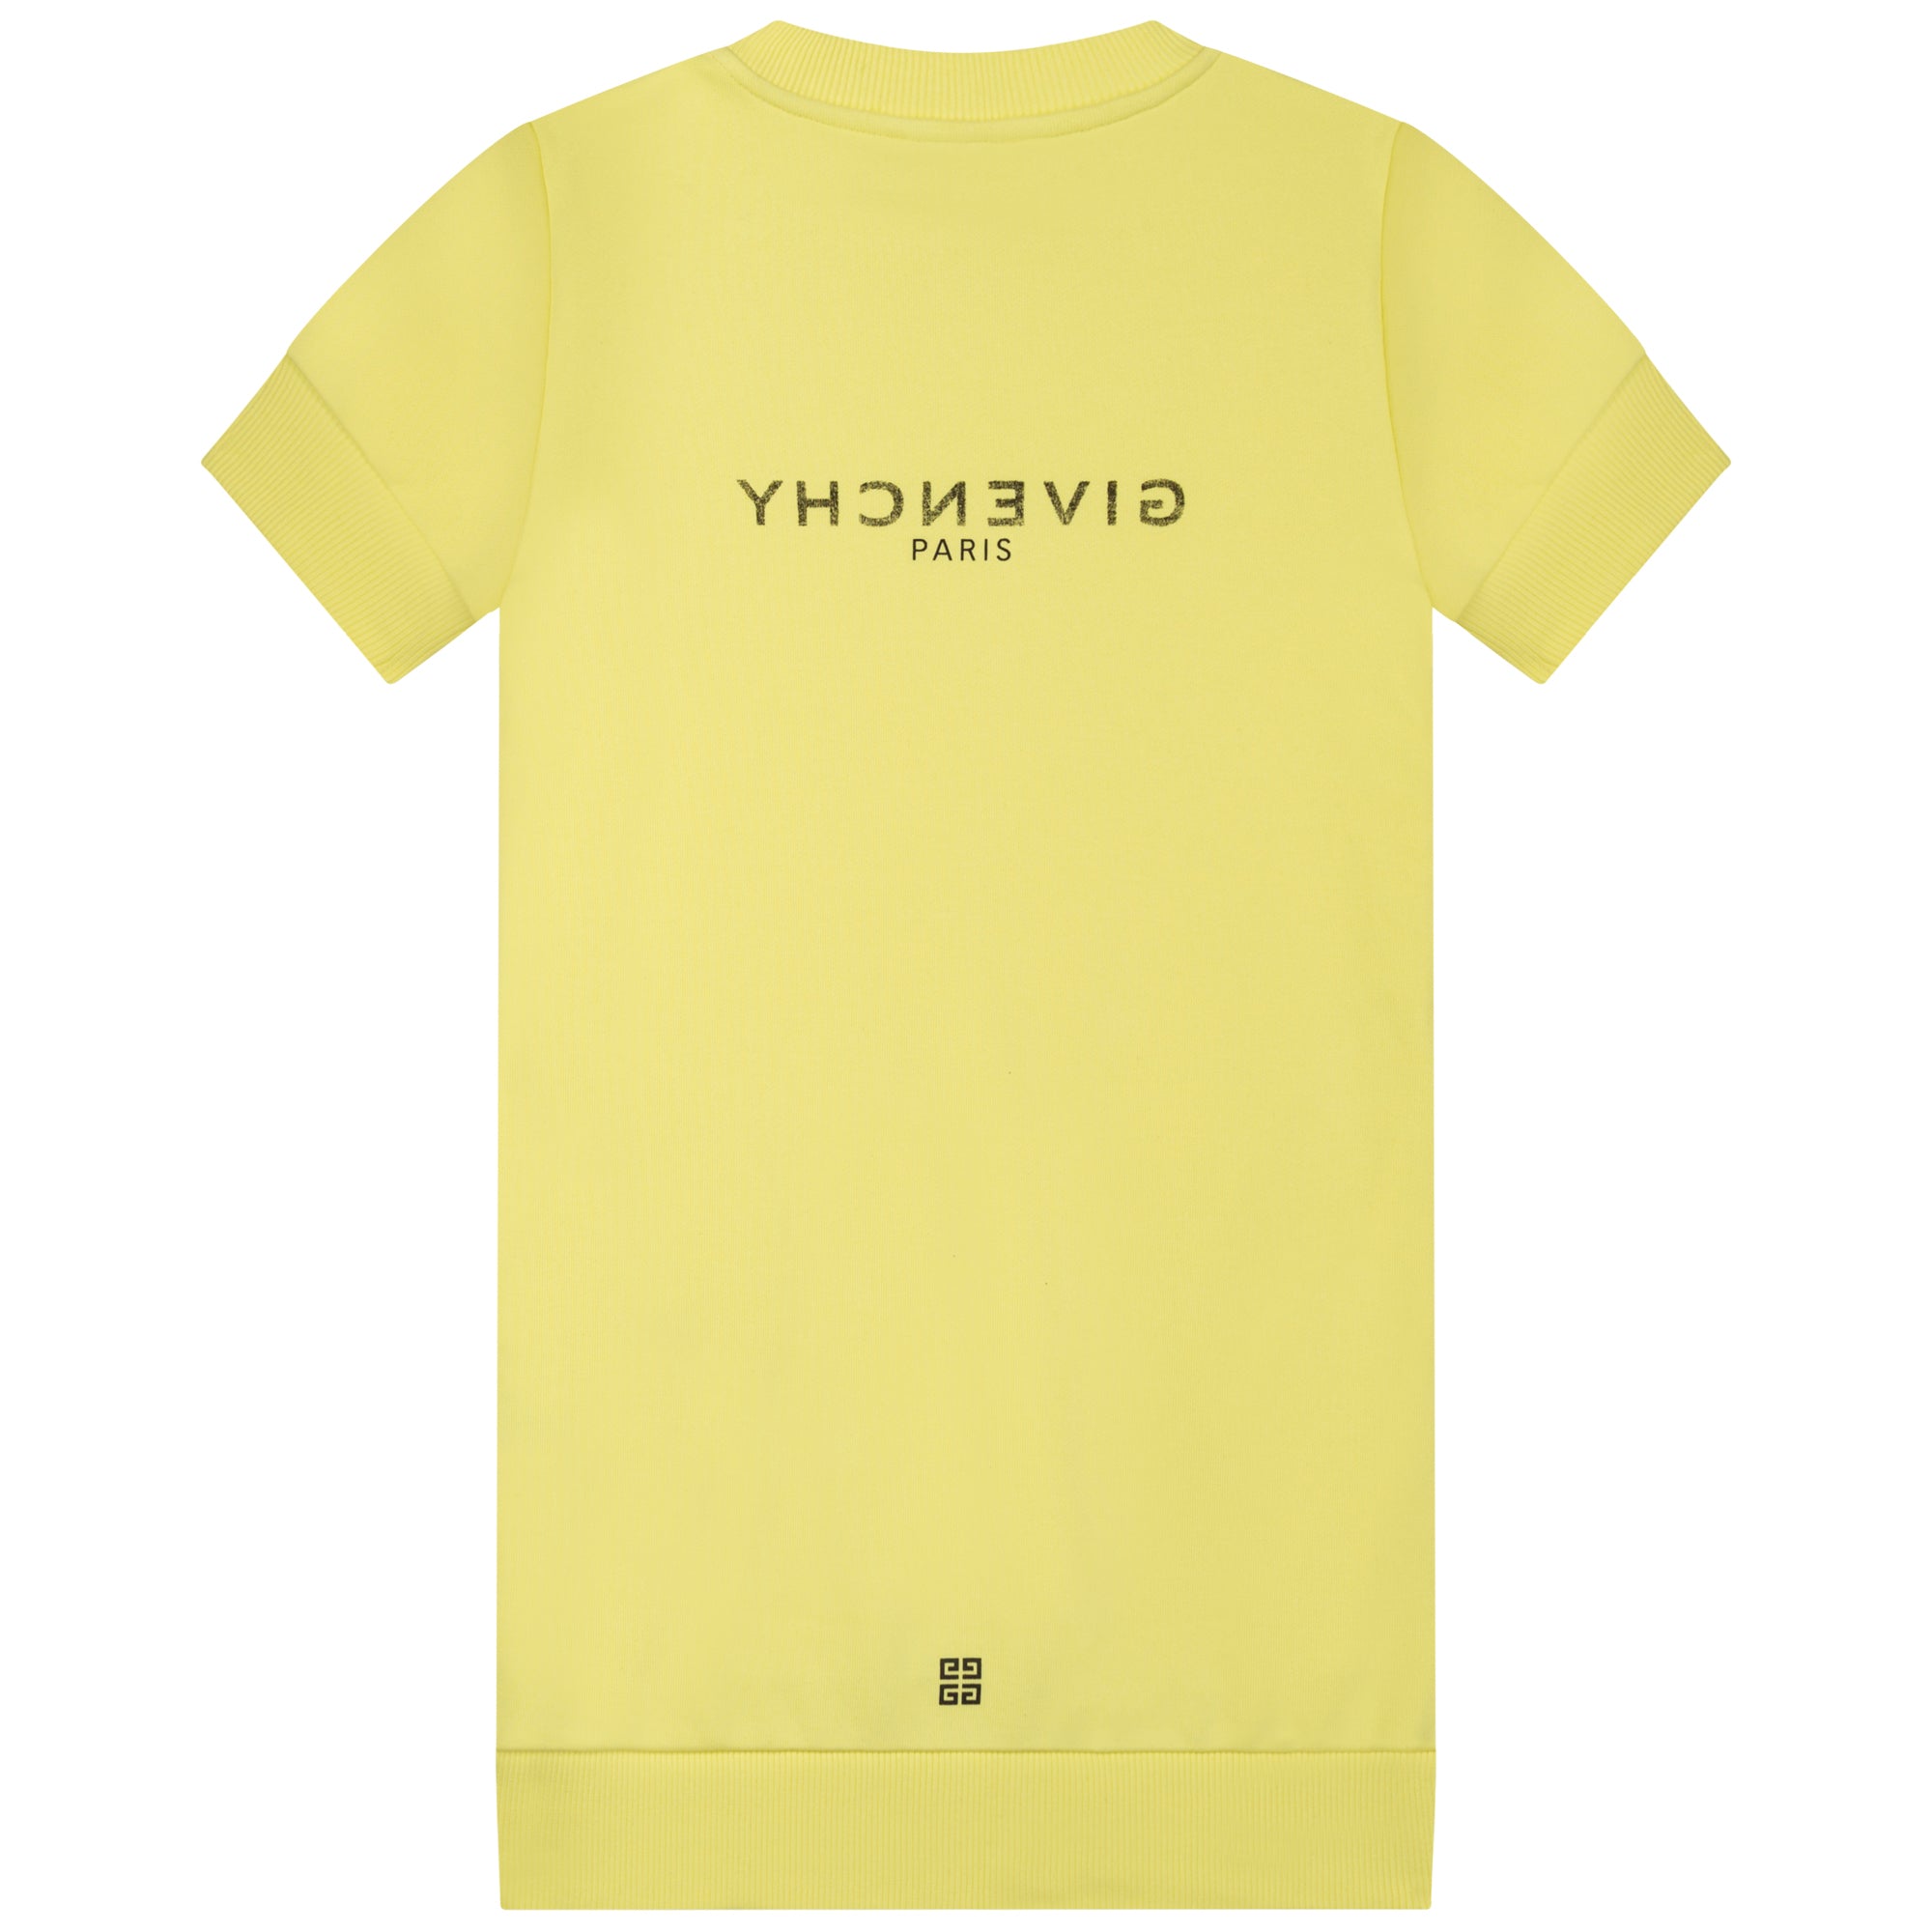 Givenchy Yellow T-Shirt Dress